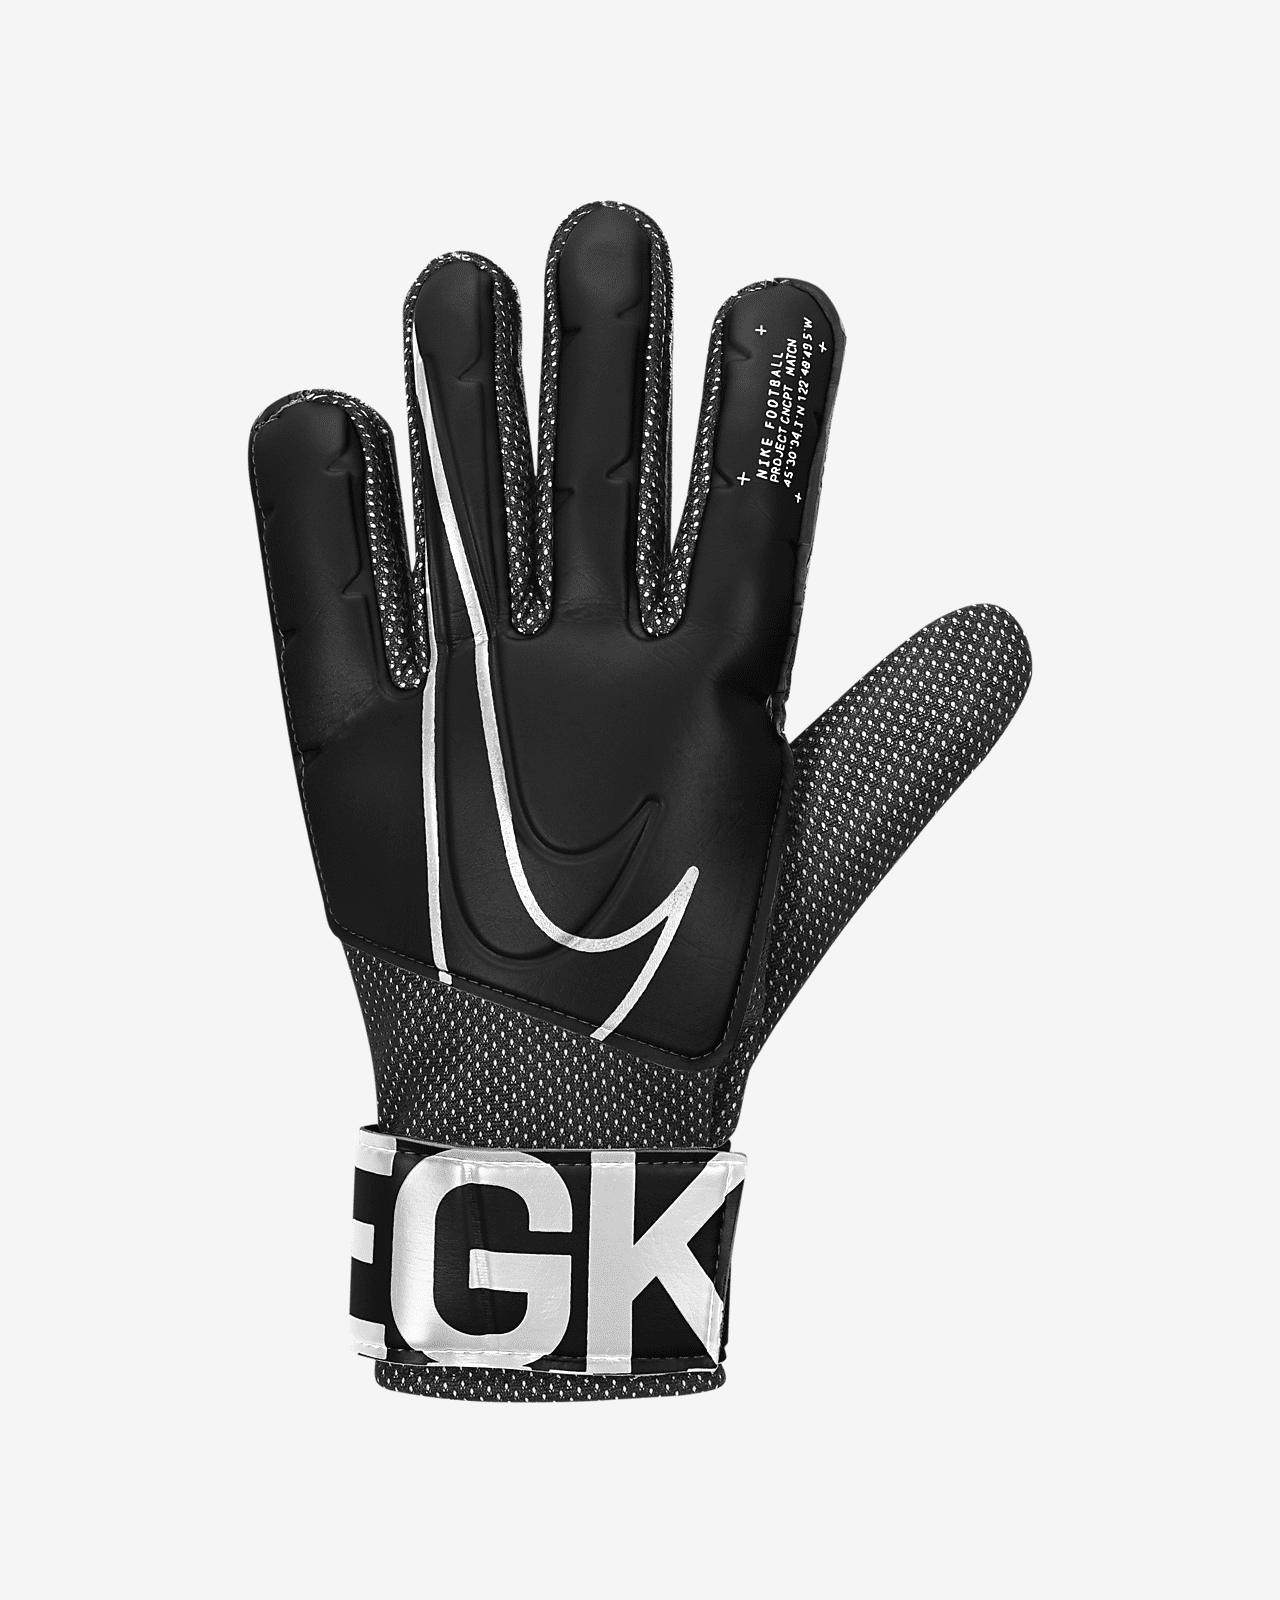 new nike goalkeeper gloves 2020